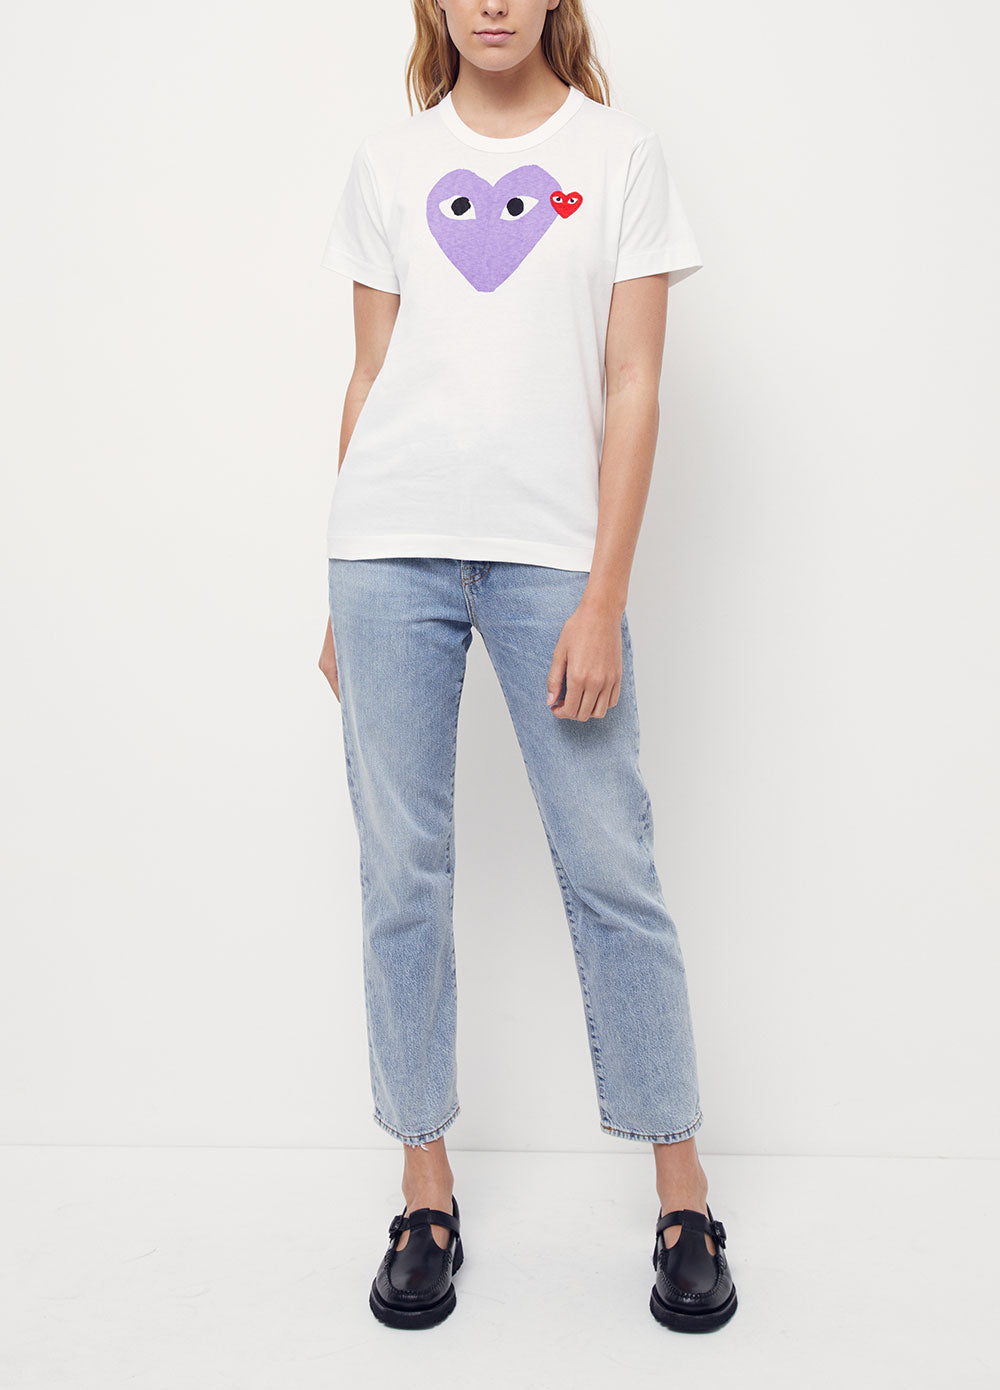 T105 Purple Heart T-shirt